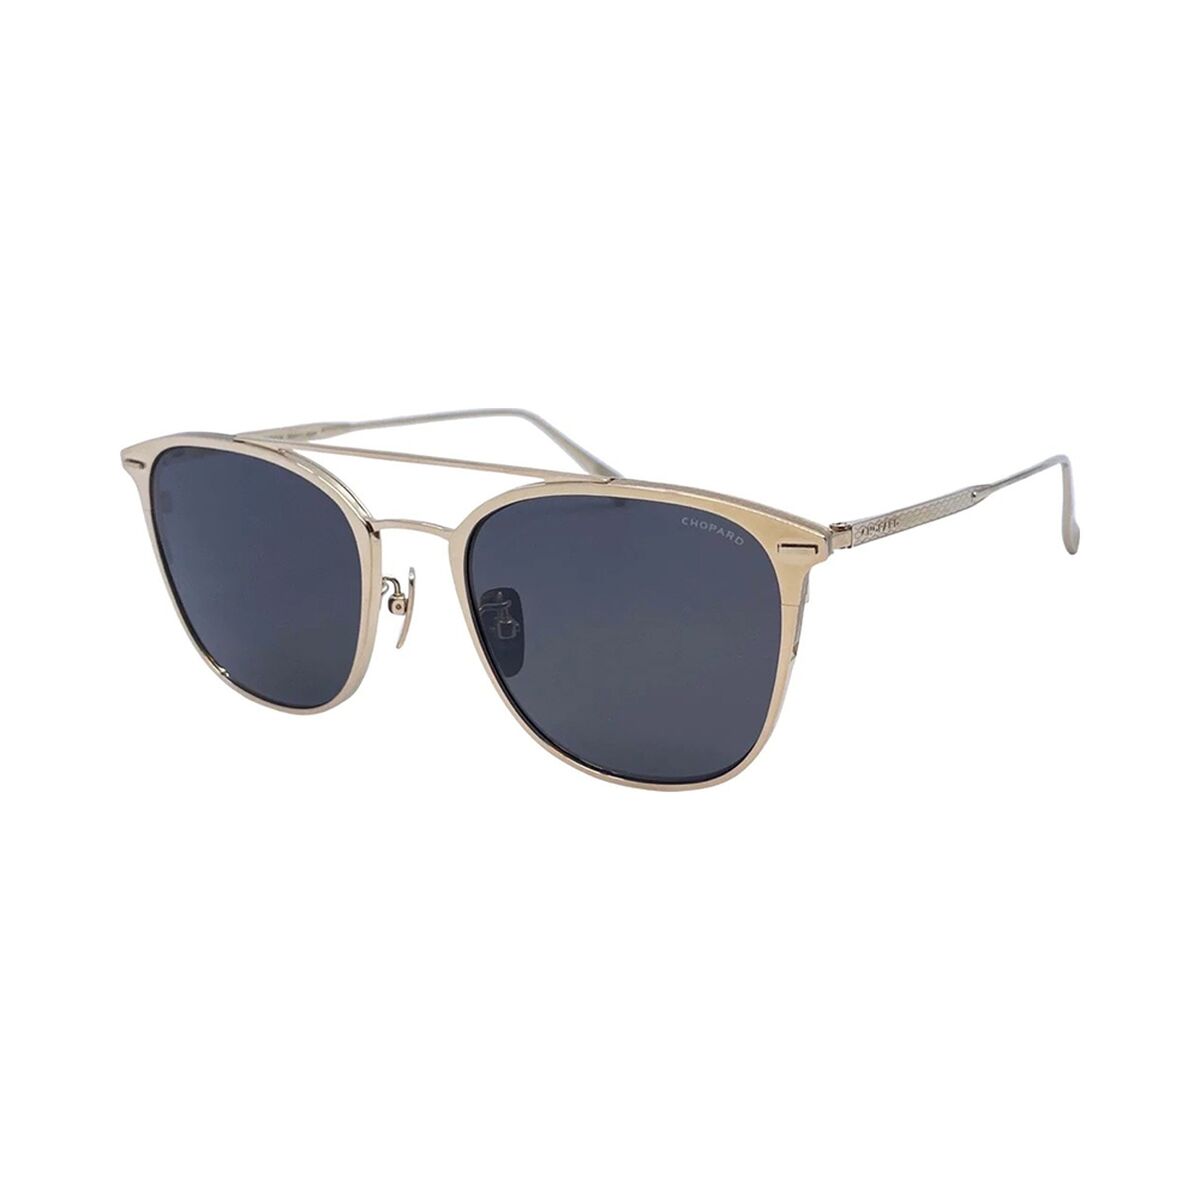 Men's Sunglasses Chopard SCHC96M-349P-55